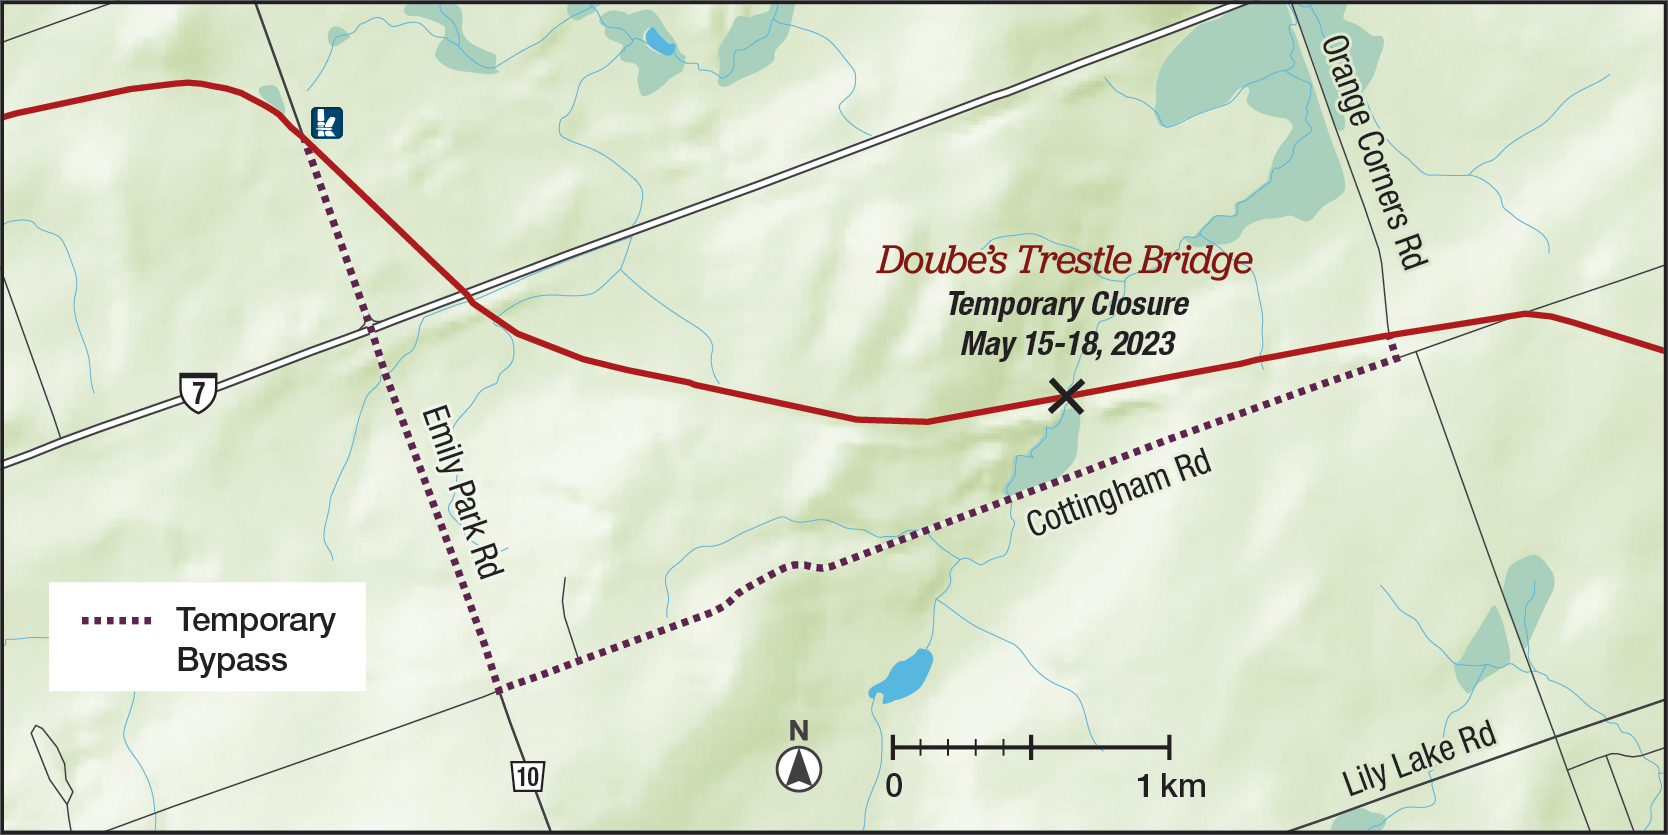 doube's trestle bridge closure map